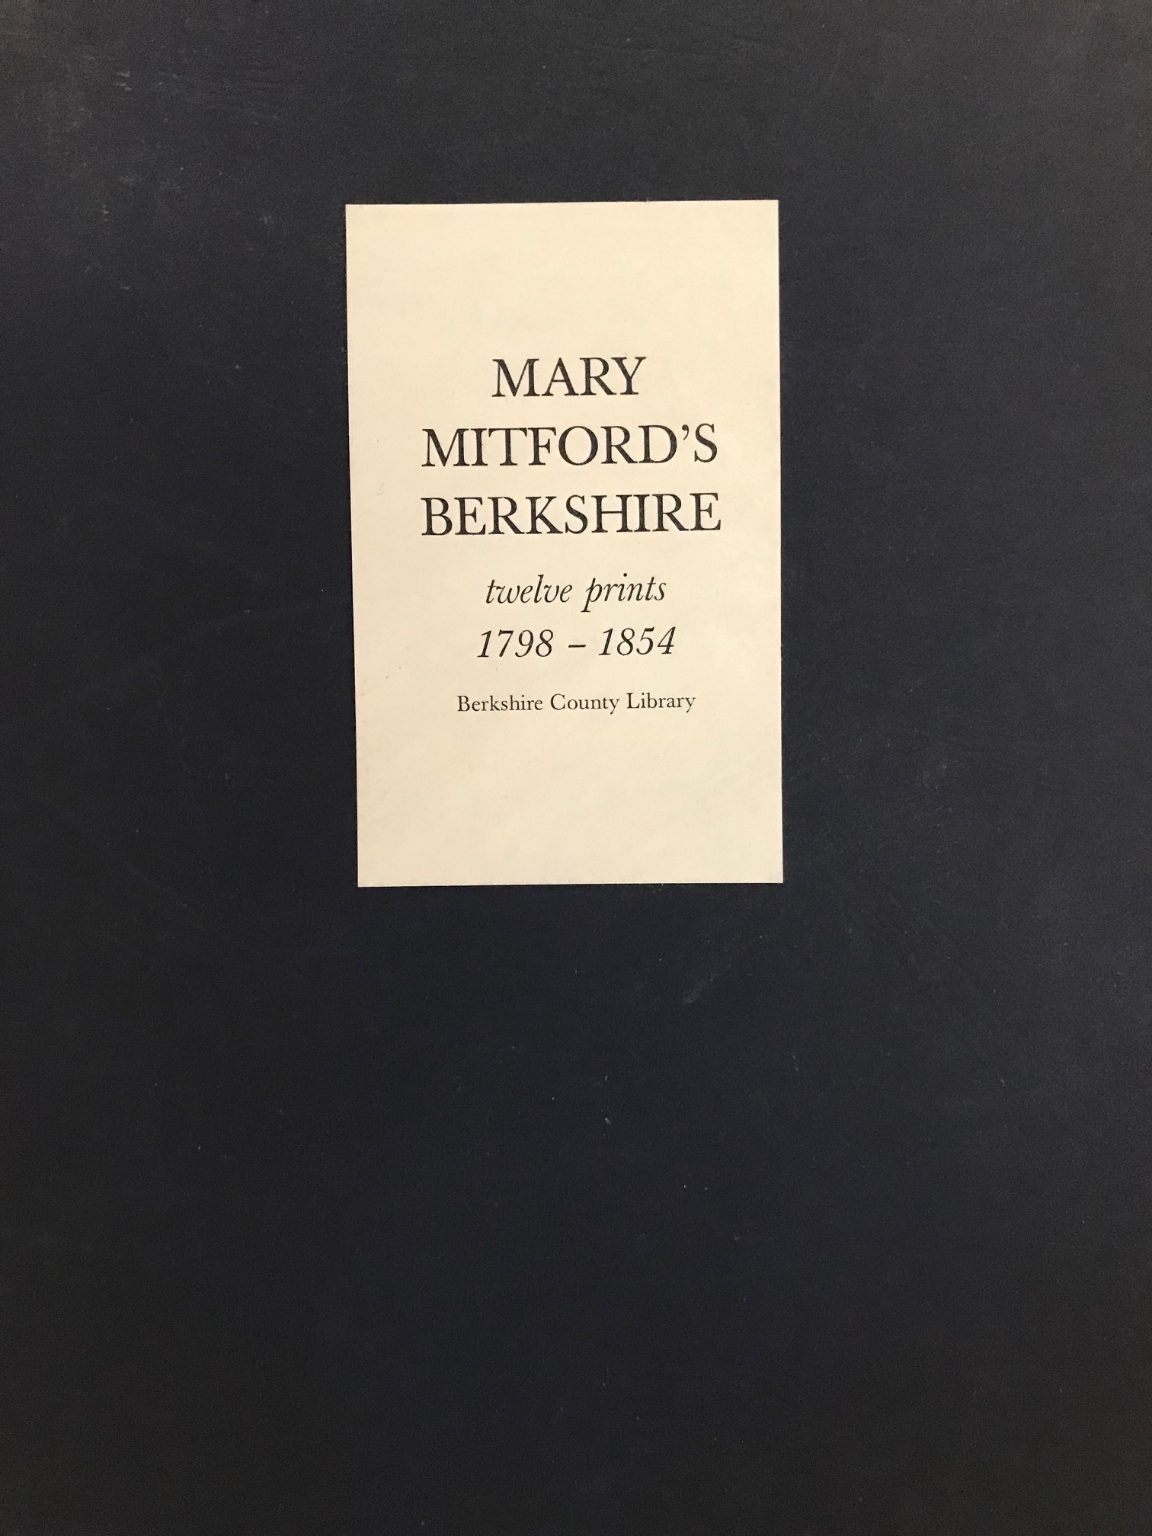 MARY MITFORD'S BERKSHIRE: Twelve Prints 1798-1854